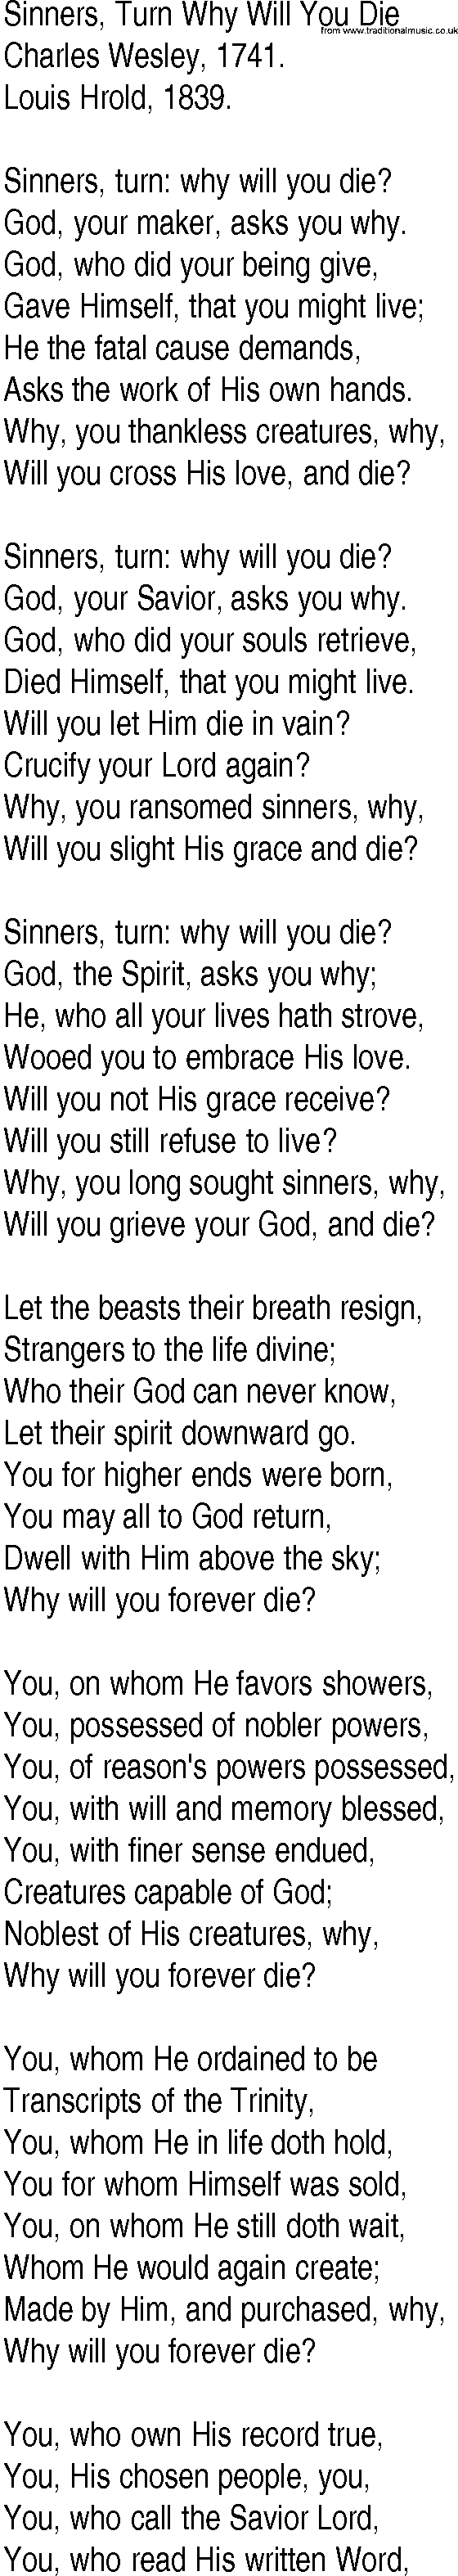 Hymn and Gospel Song: Sinners, Turn Why Will You Die by Charles Wesley lyrics